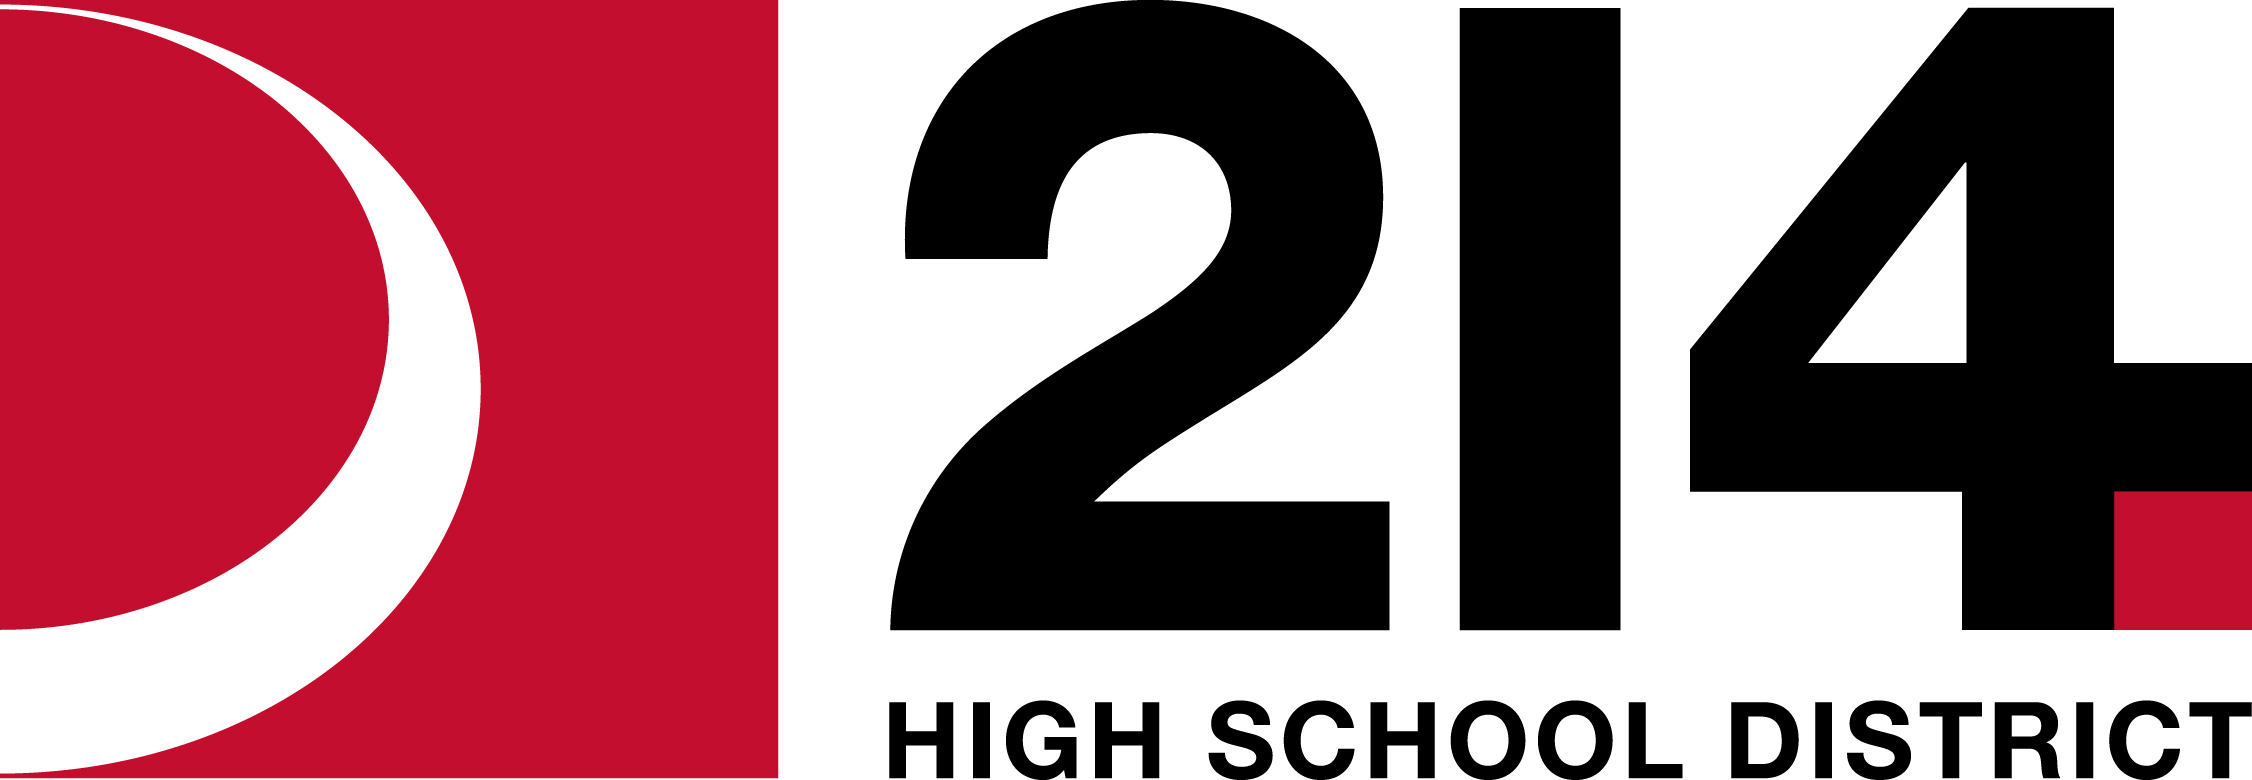 Township High School Dist 214 - PD